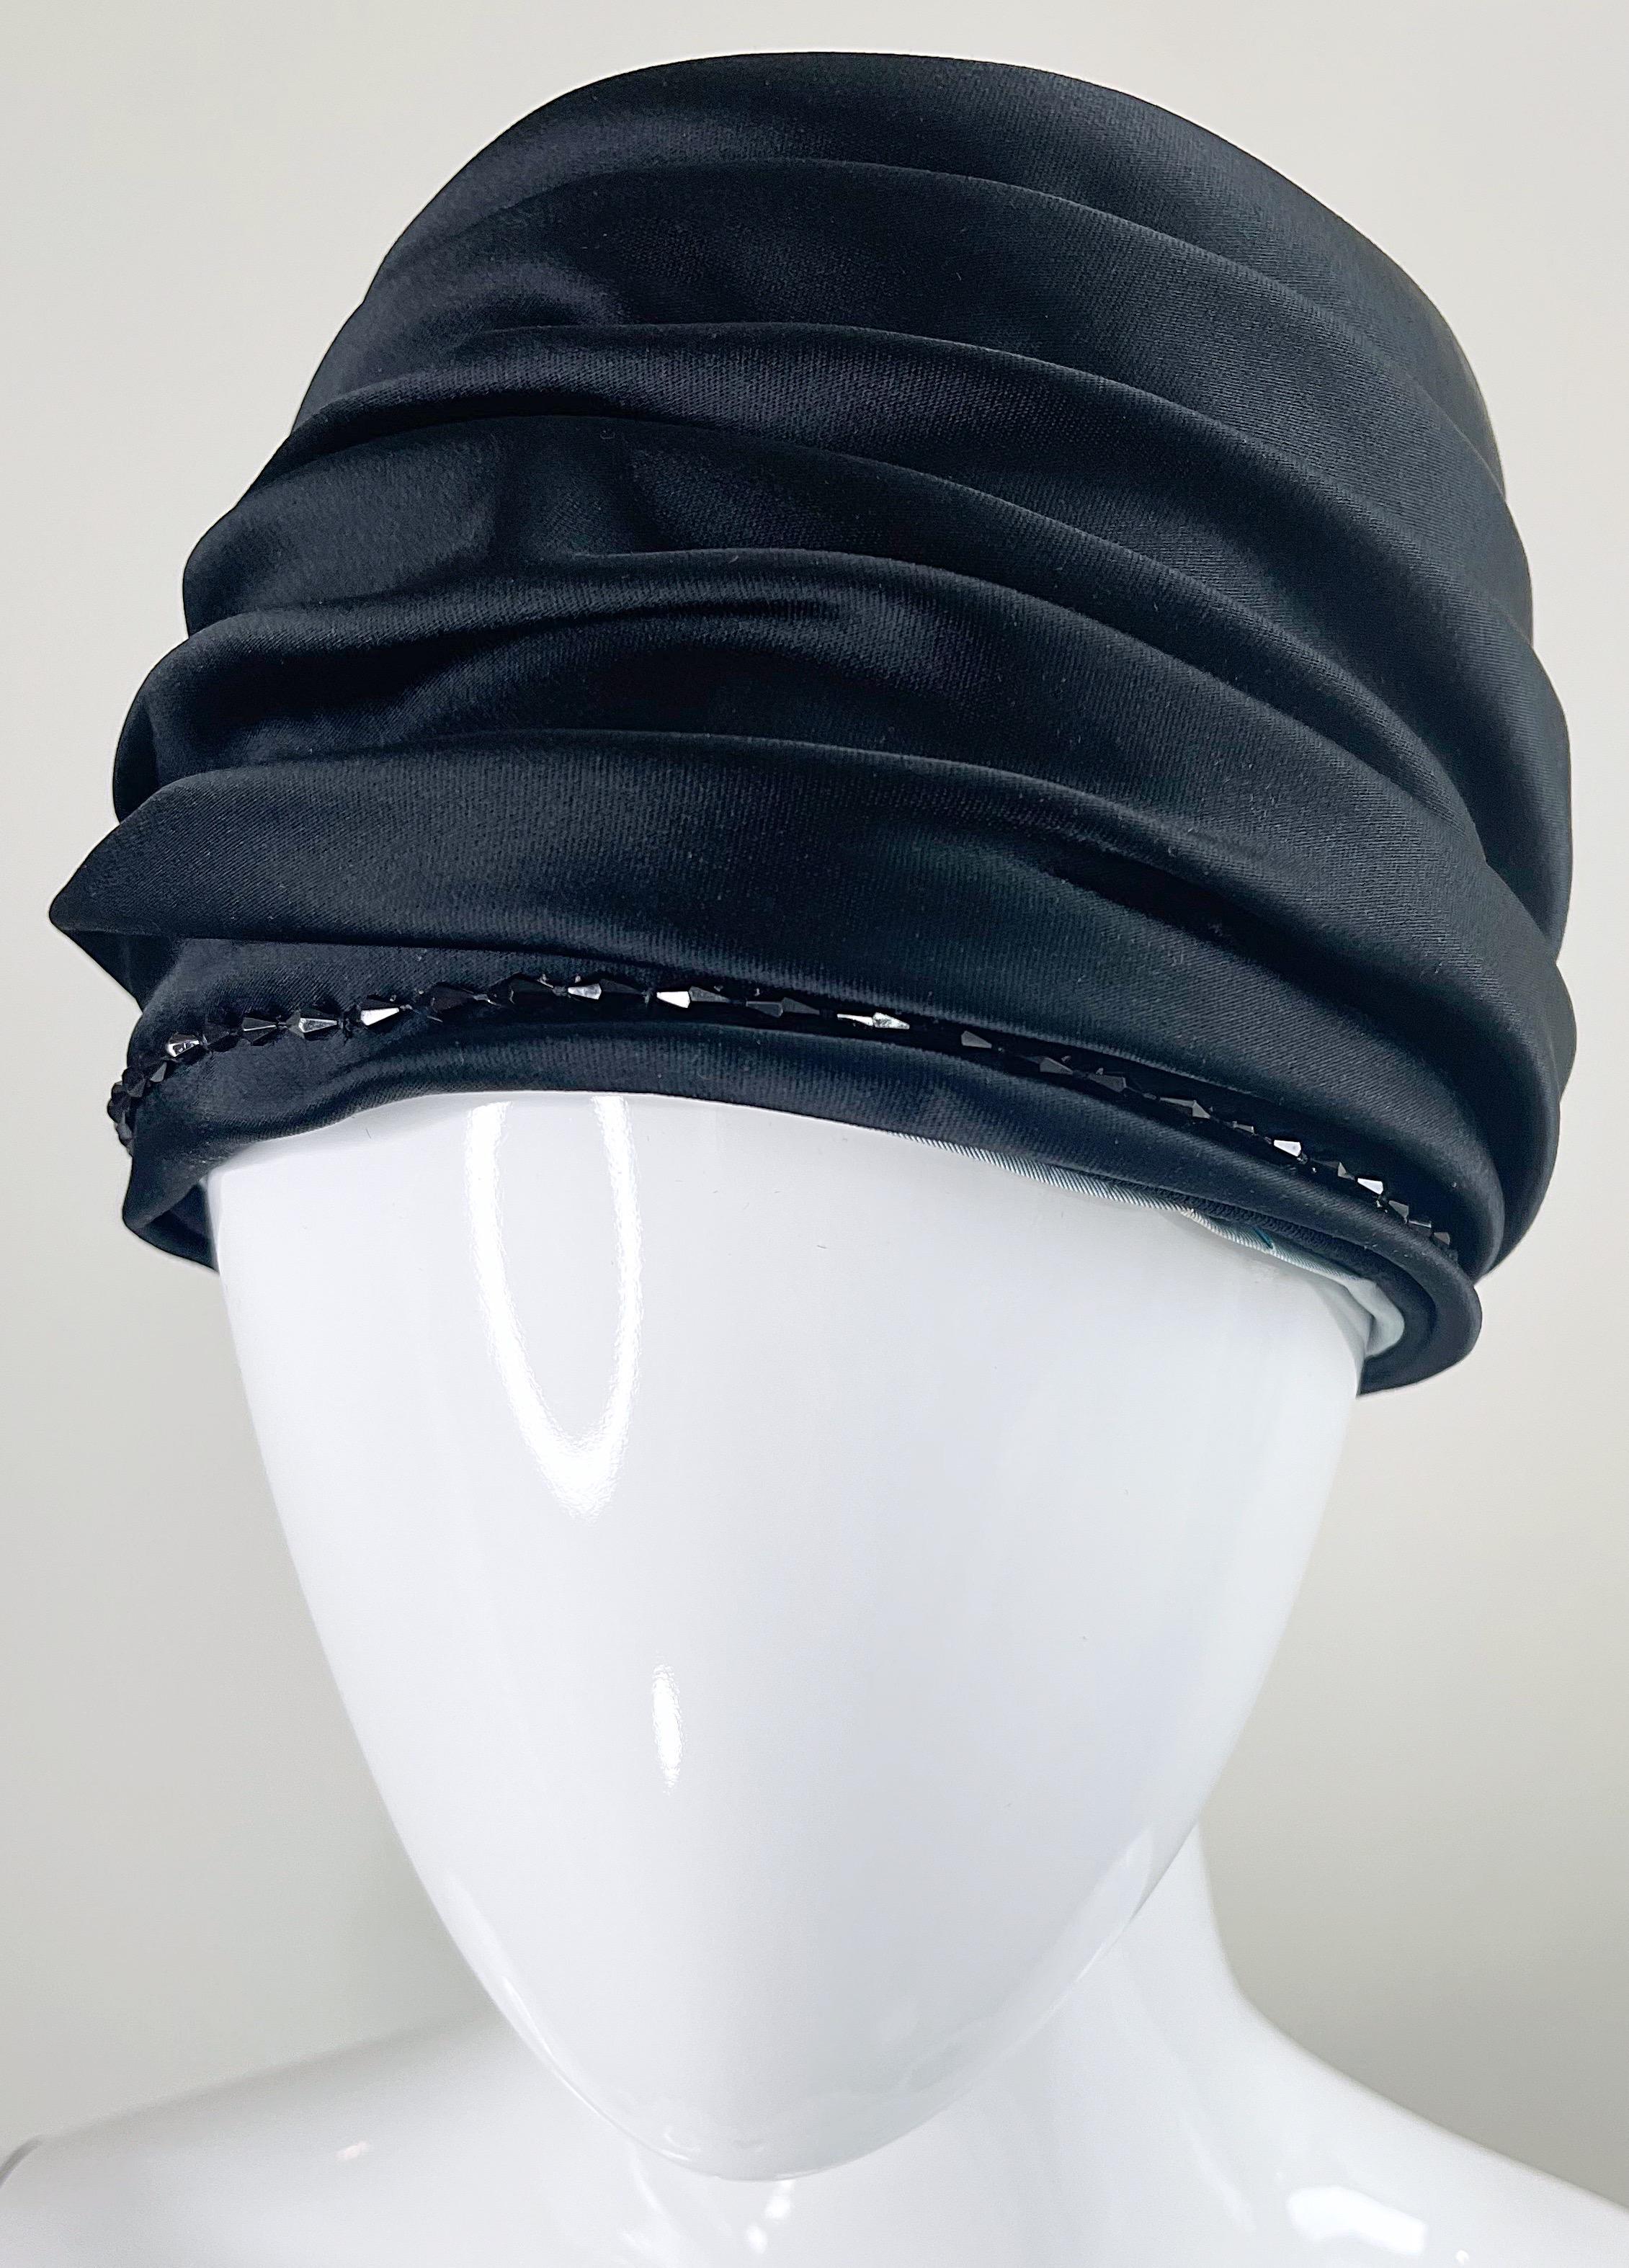 schwarzer turban bedeutung